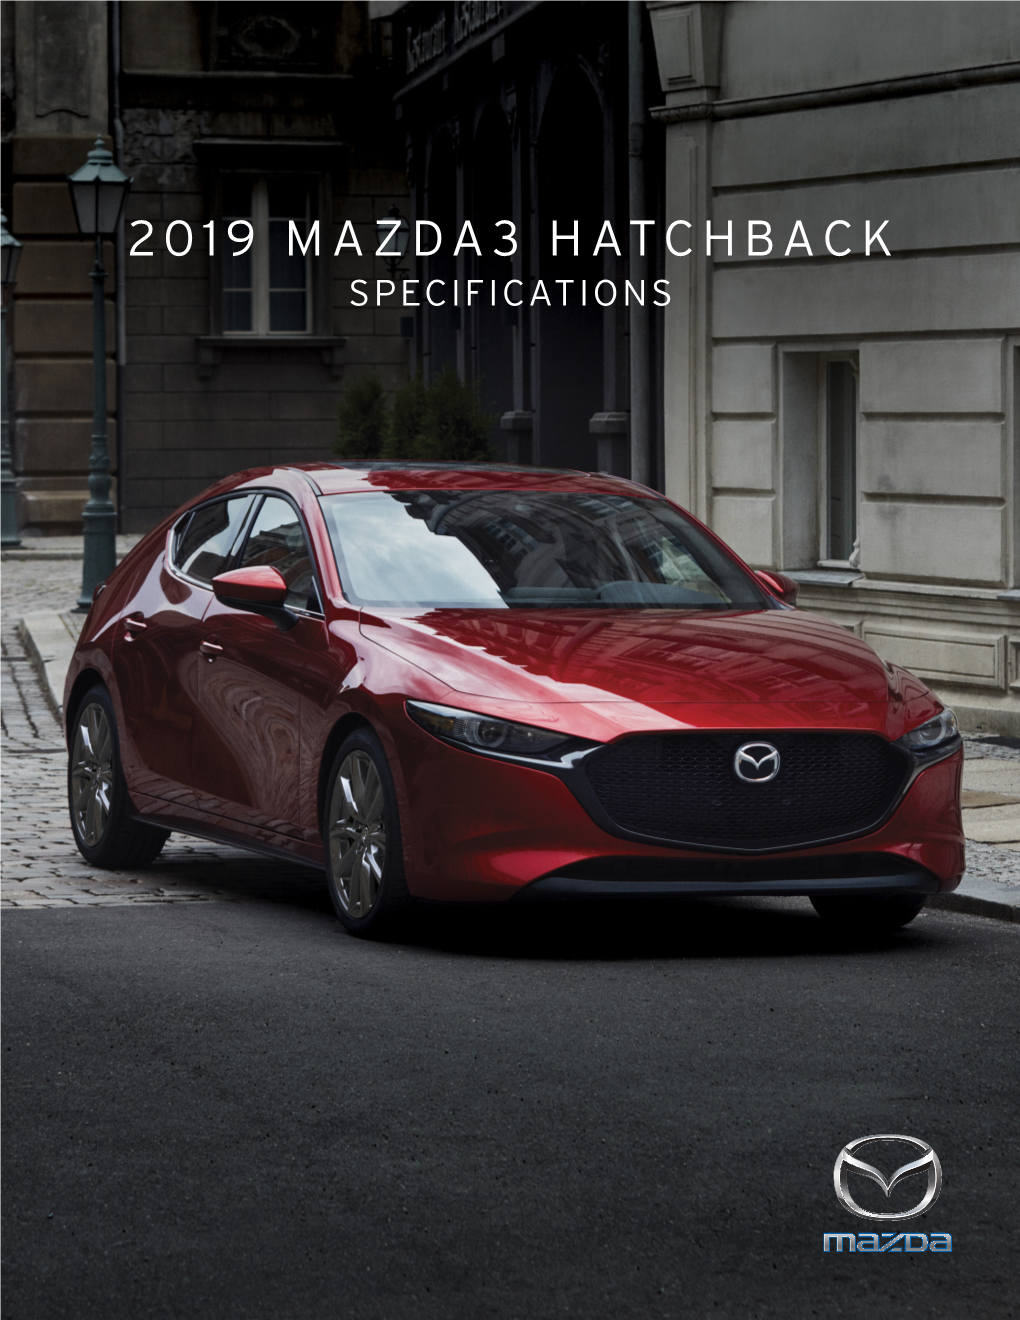 2019 Mazda3 Hatchback Specifications 2019 Mazda3 Hatchback